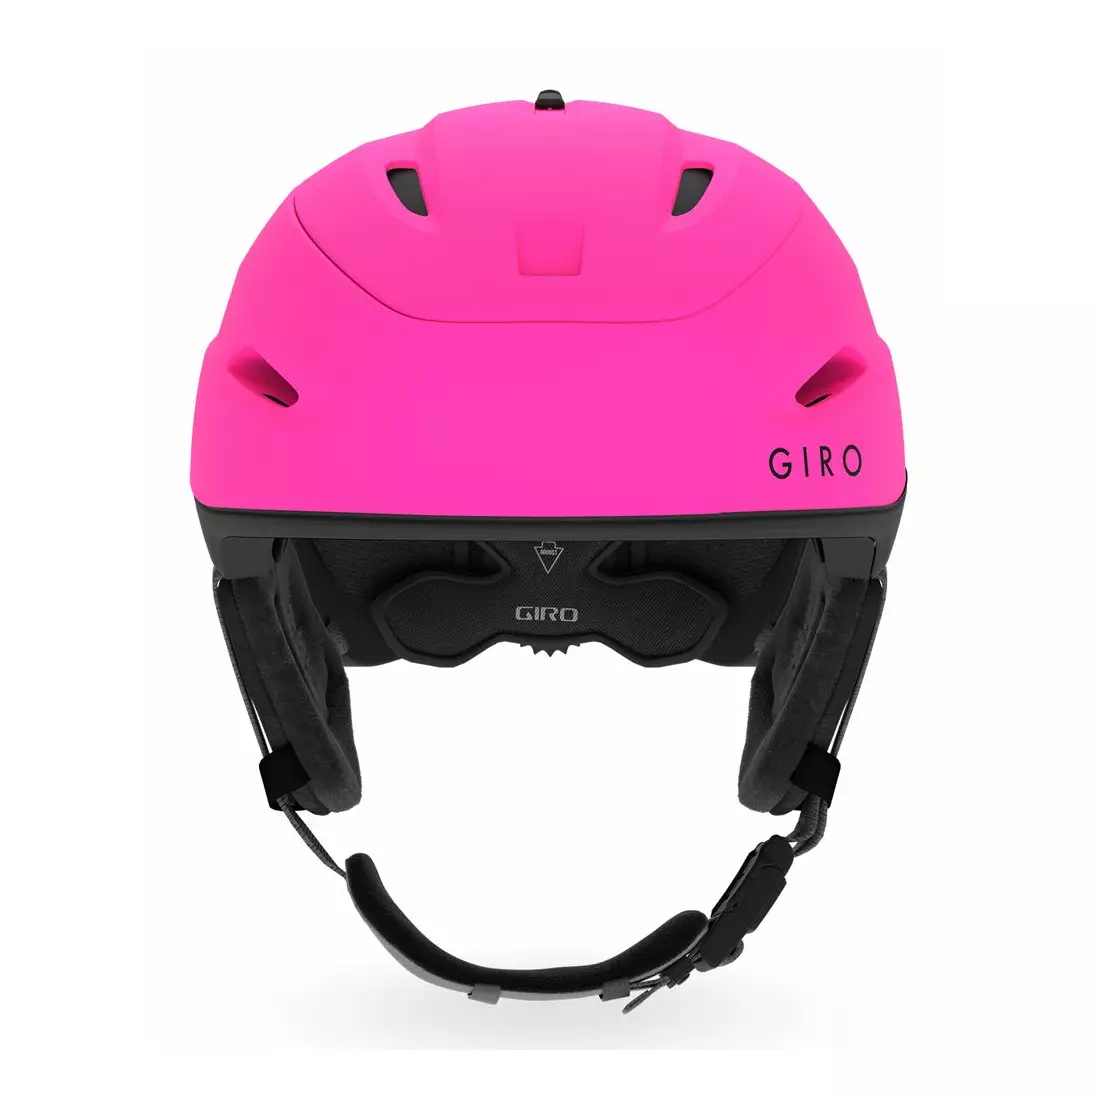 Női sí / snowboard sisak GIRO STRATA MIPS matte bright pink black 